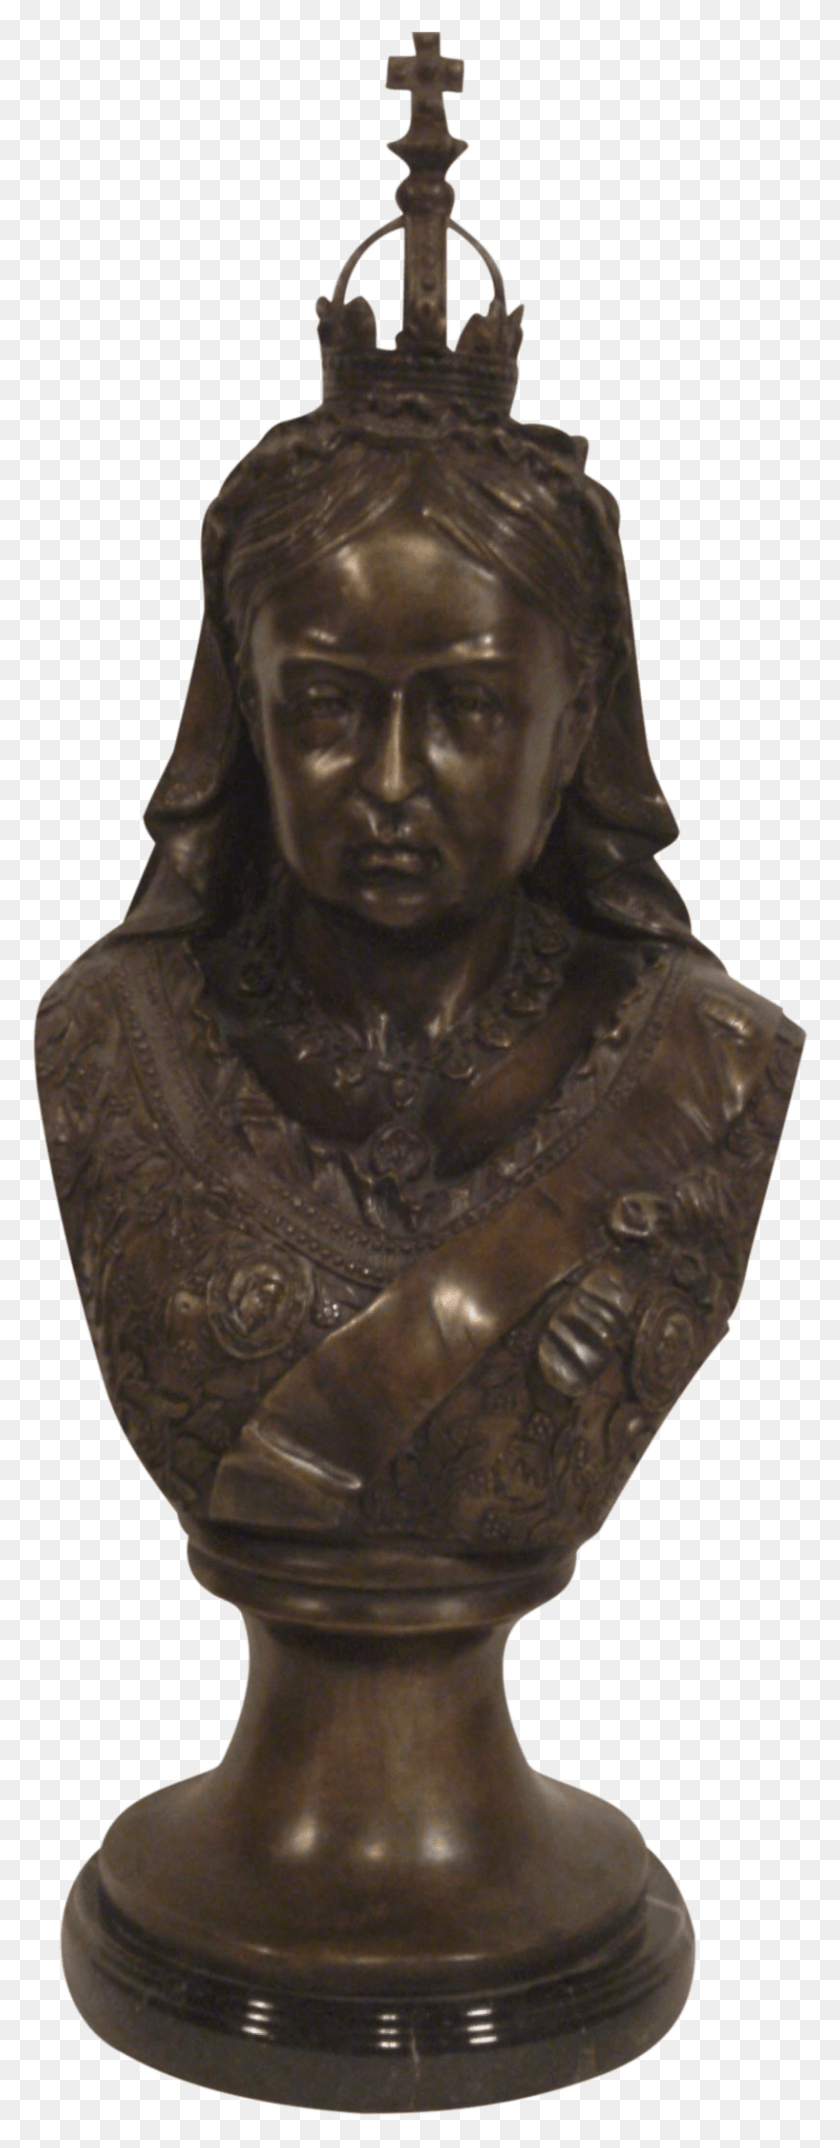 817x2188 La Reina Victoria, Busto De Bronce, Escultura De Bronce, Persona, Humano Hd Png